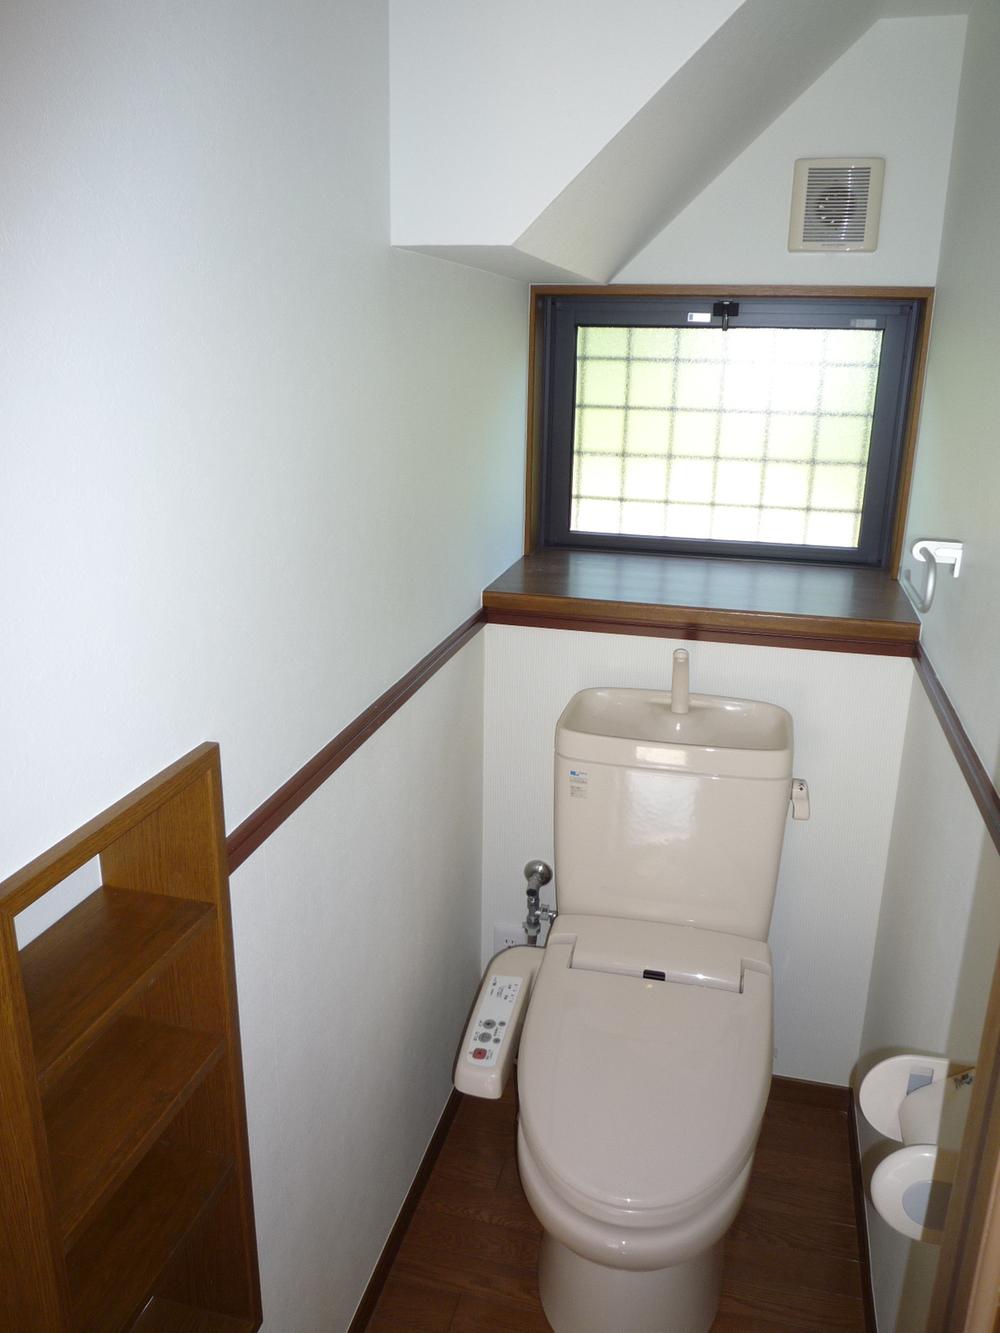 Toilet. Receipt ・ With small window